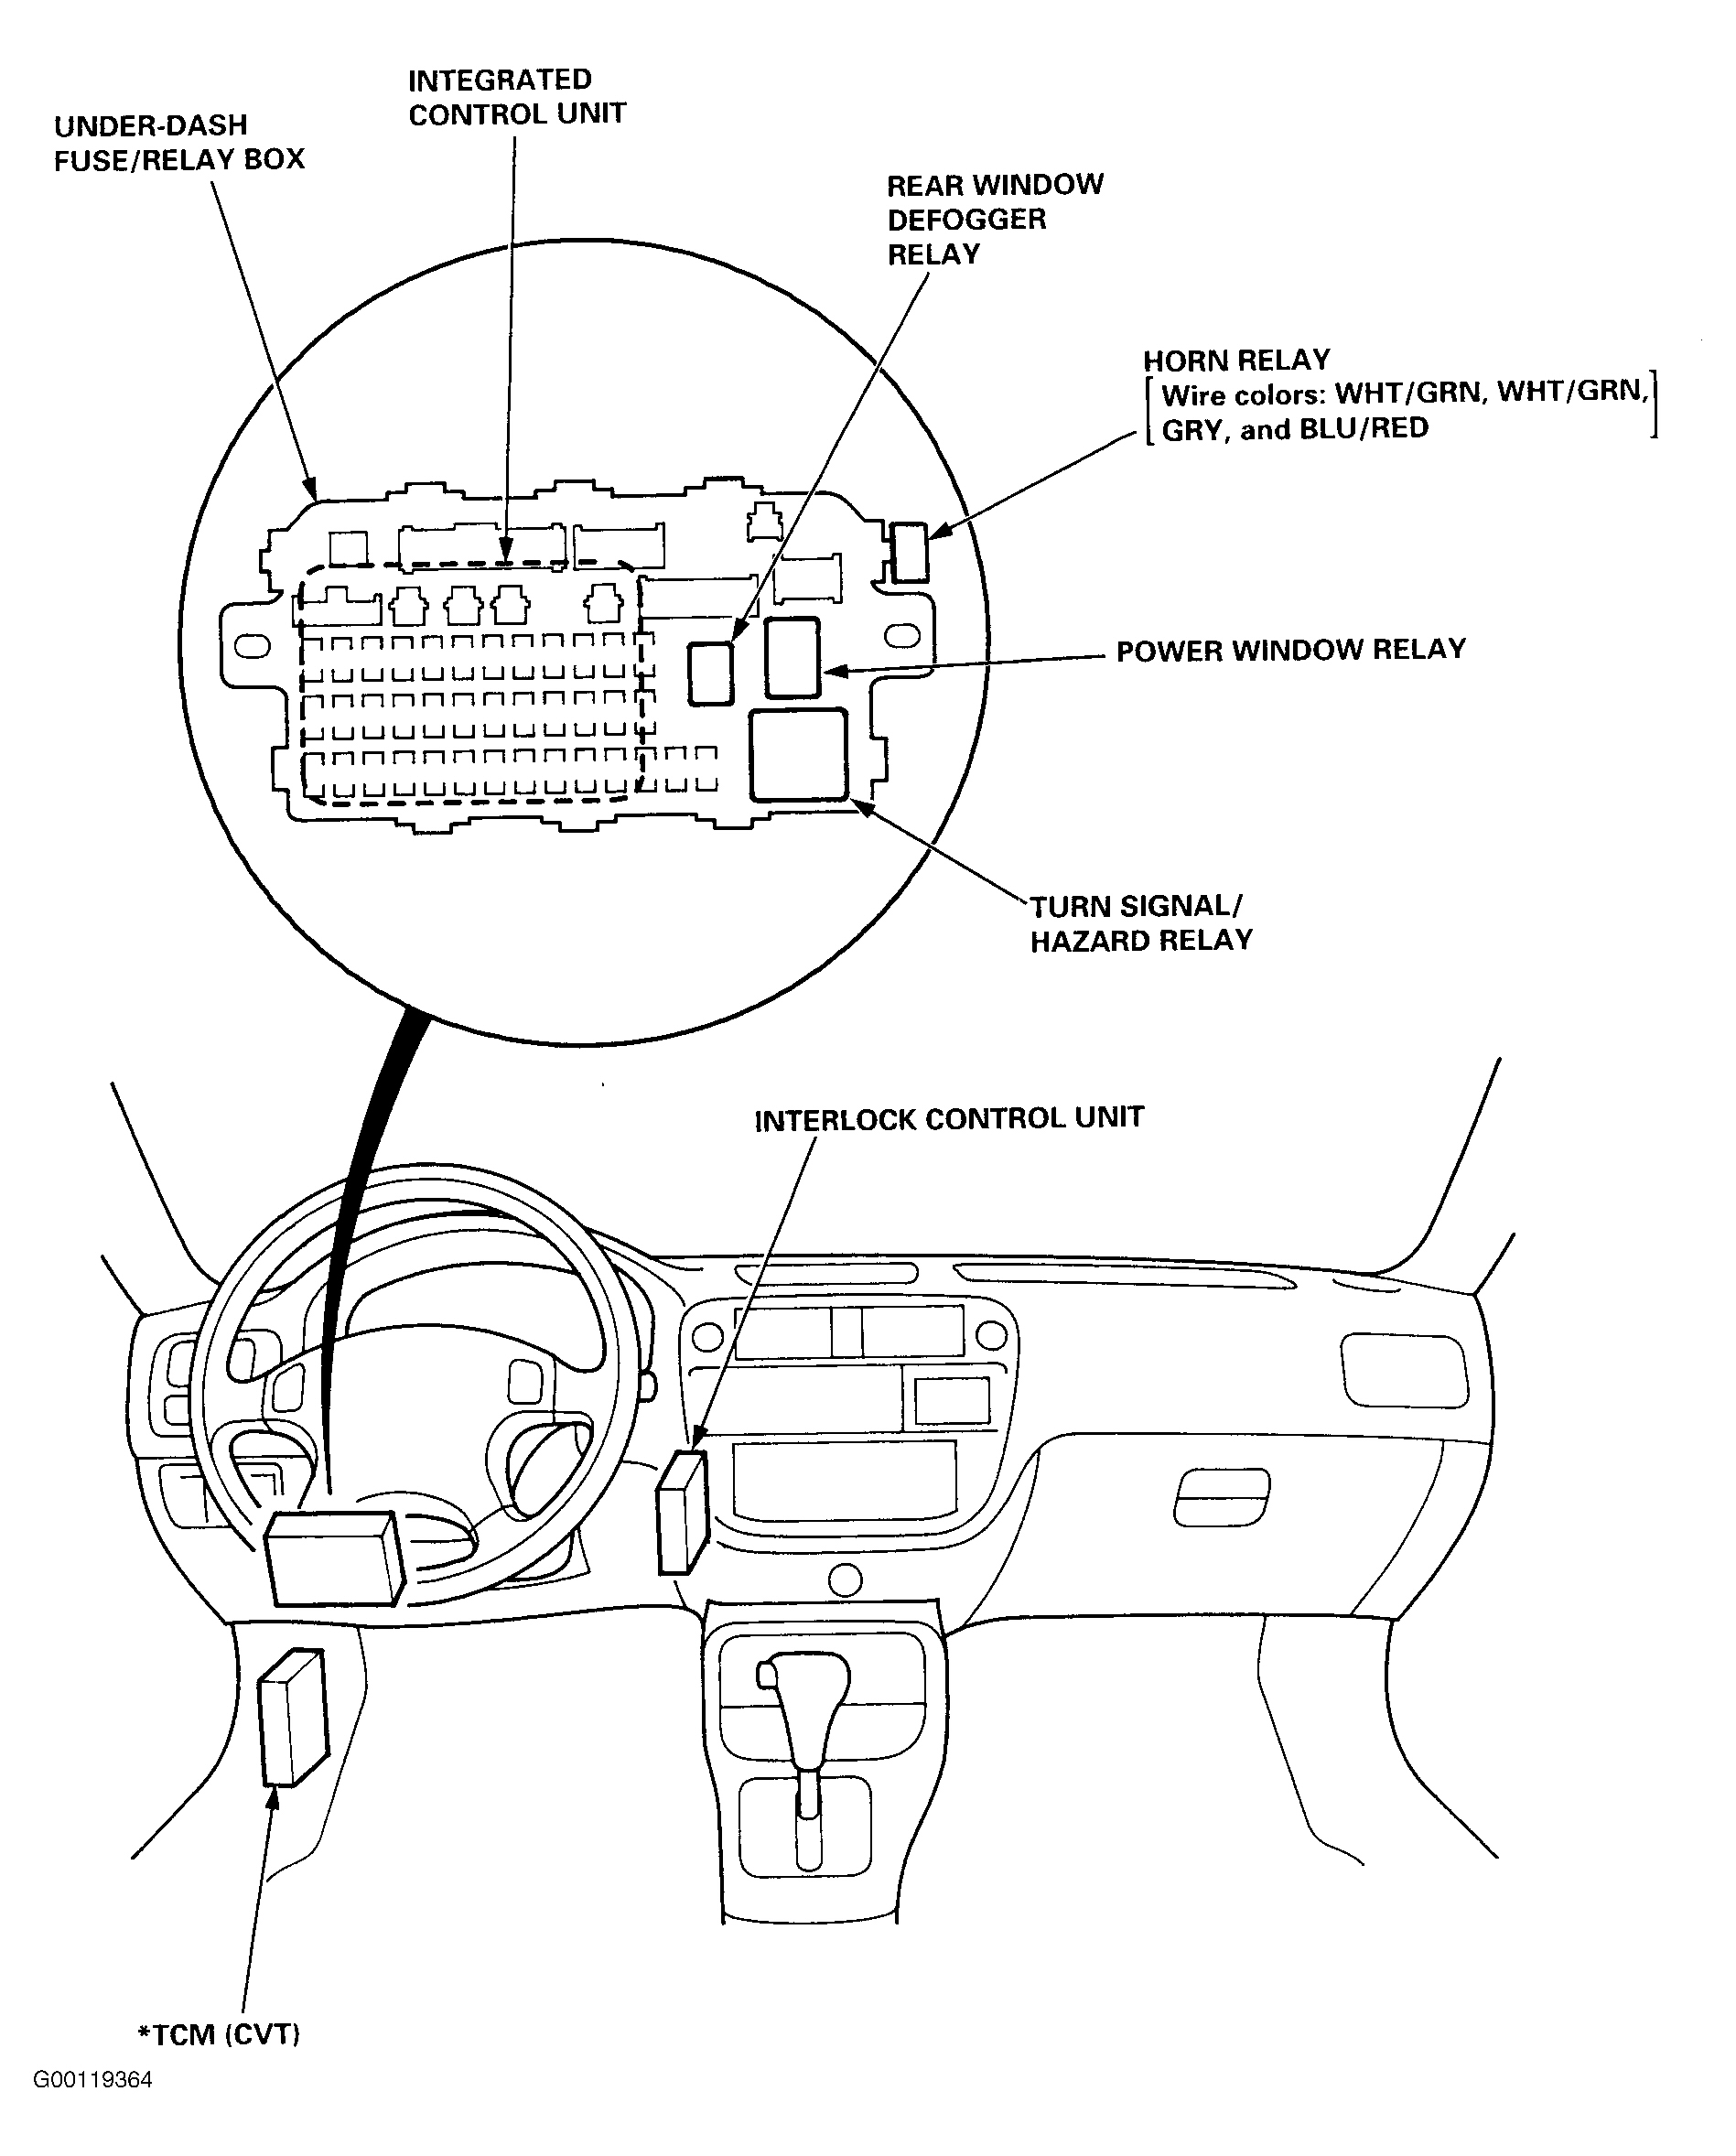 Honda Civic LX 2000 - Component Locations -  Locating Under-Dash Fuse/Relay Box (1996-97)